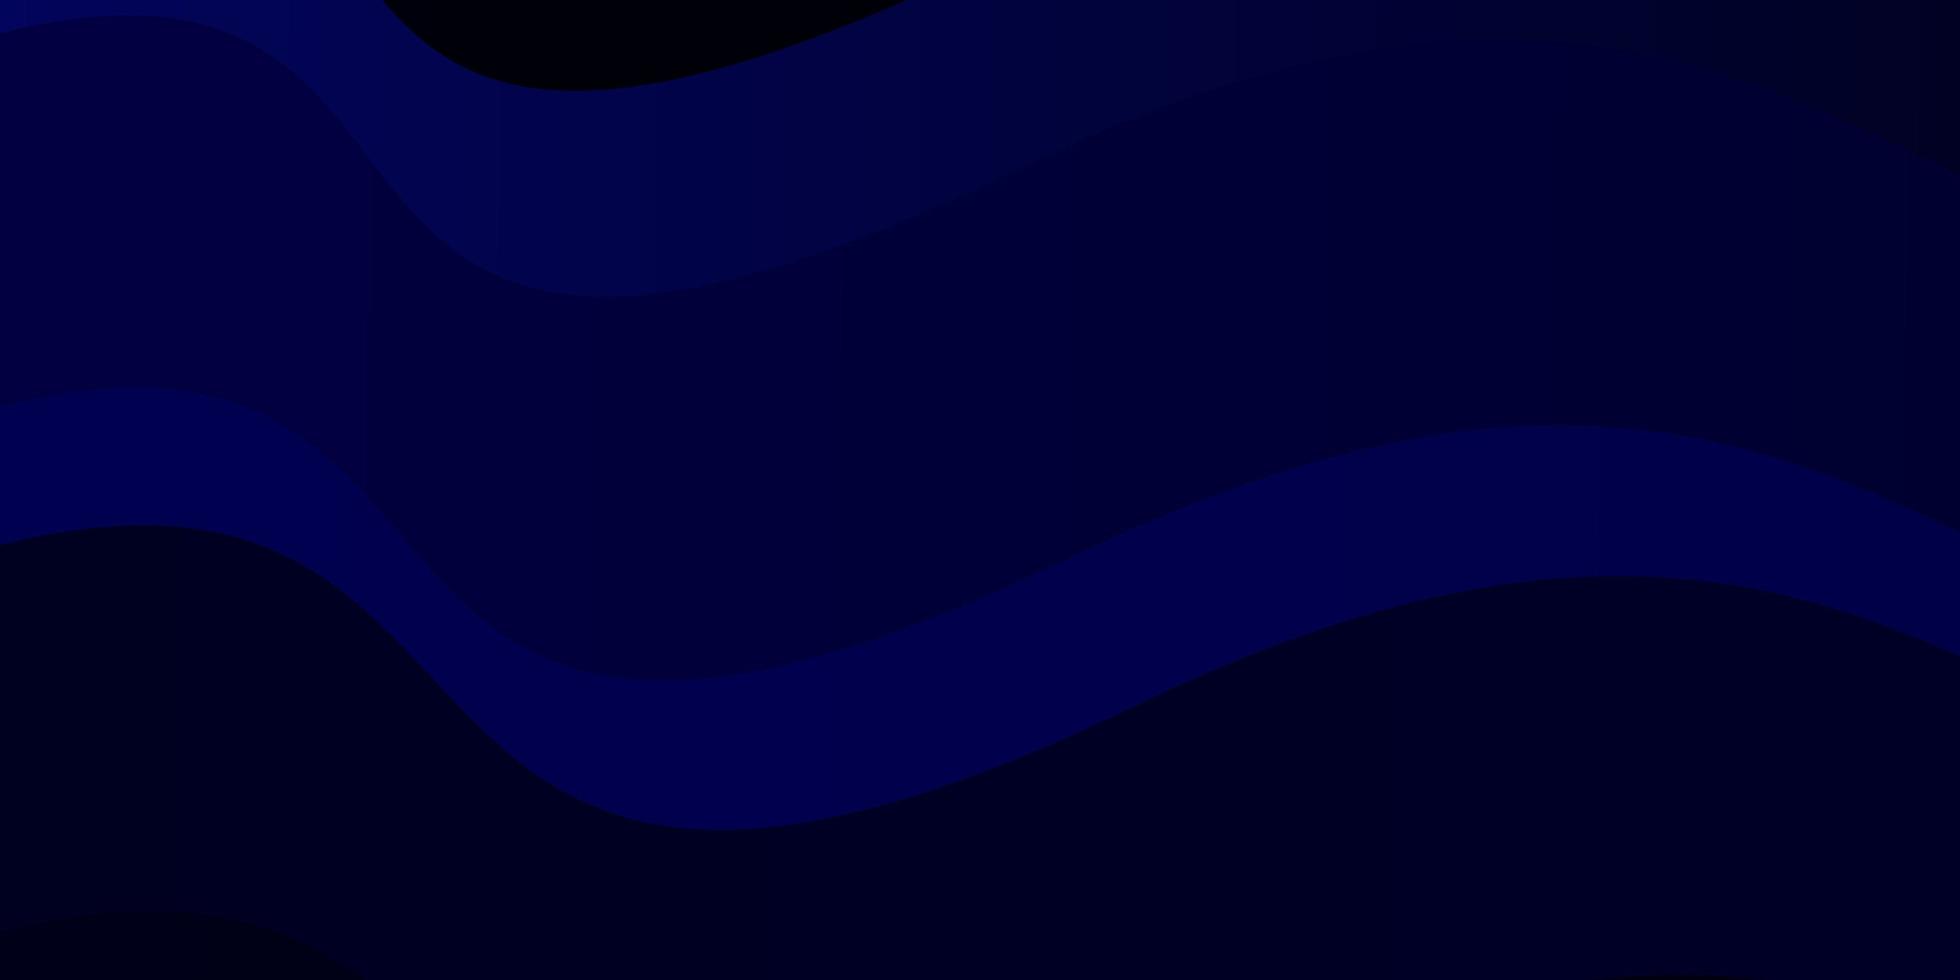 Fondo de vector azul oscuro con líneas dobladas. Ilustración abstracta con líneas de degradado bandy. patrón para sitios web, páginas de destino.